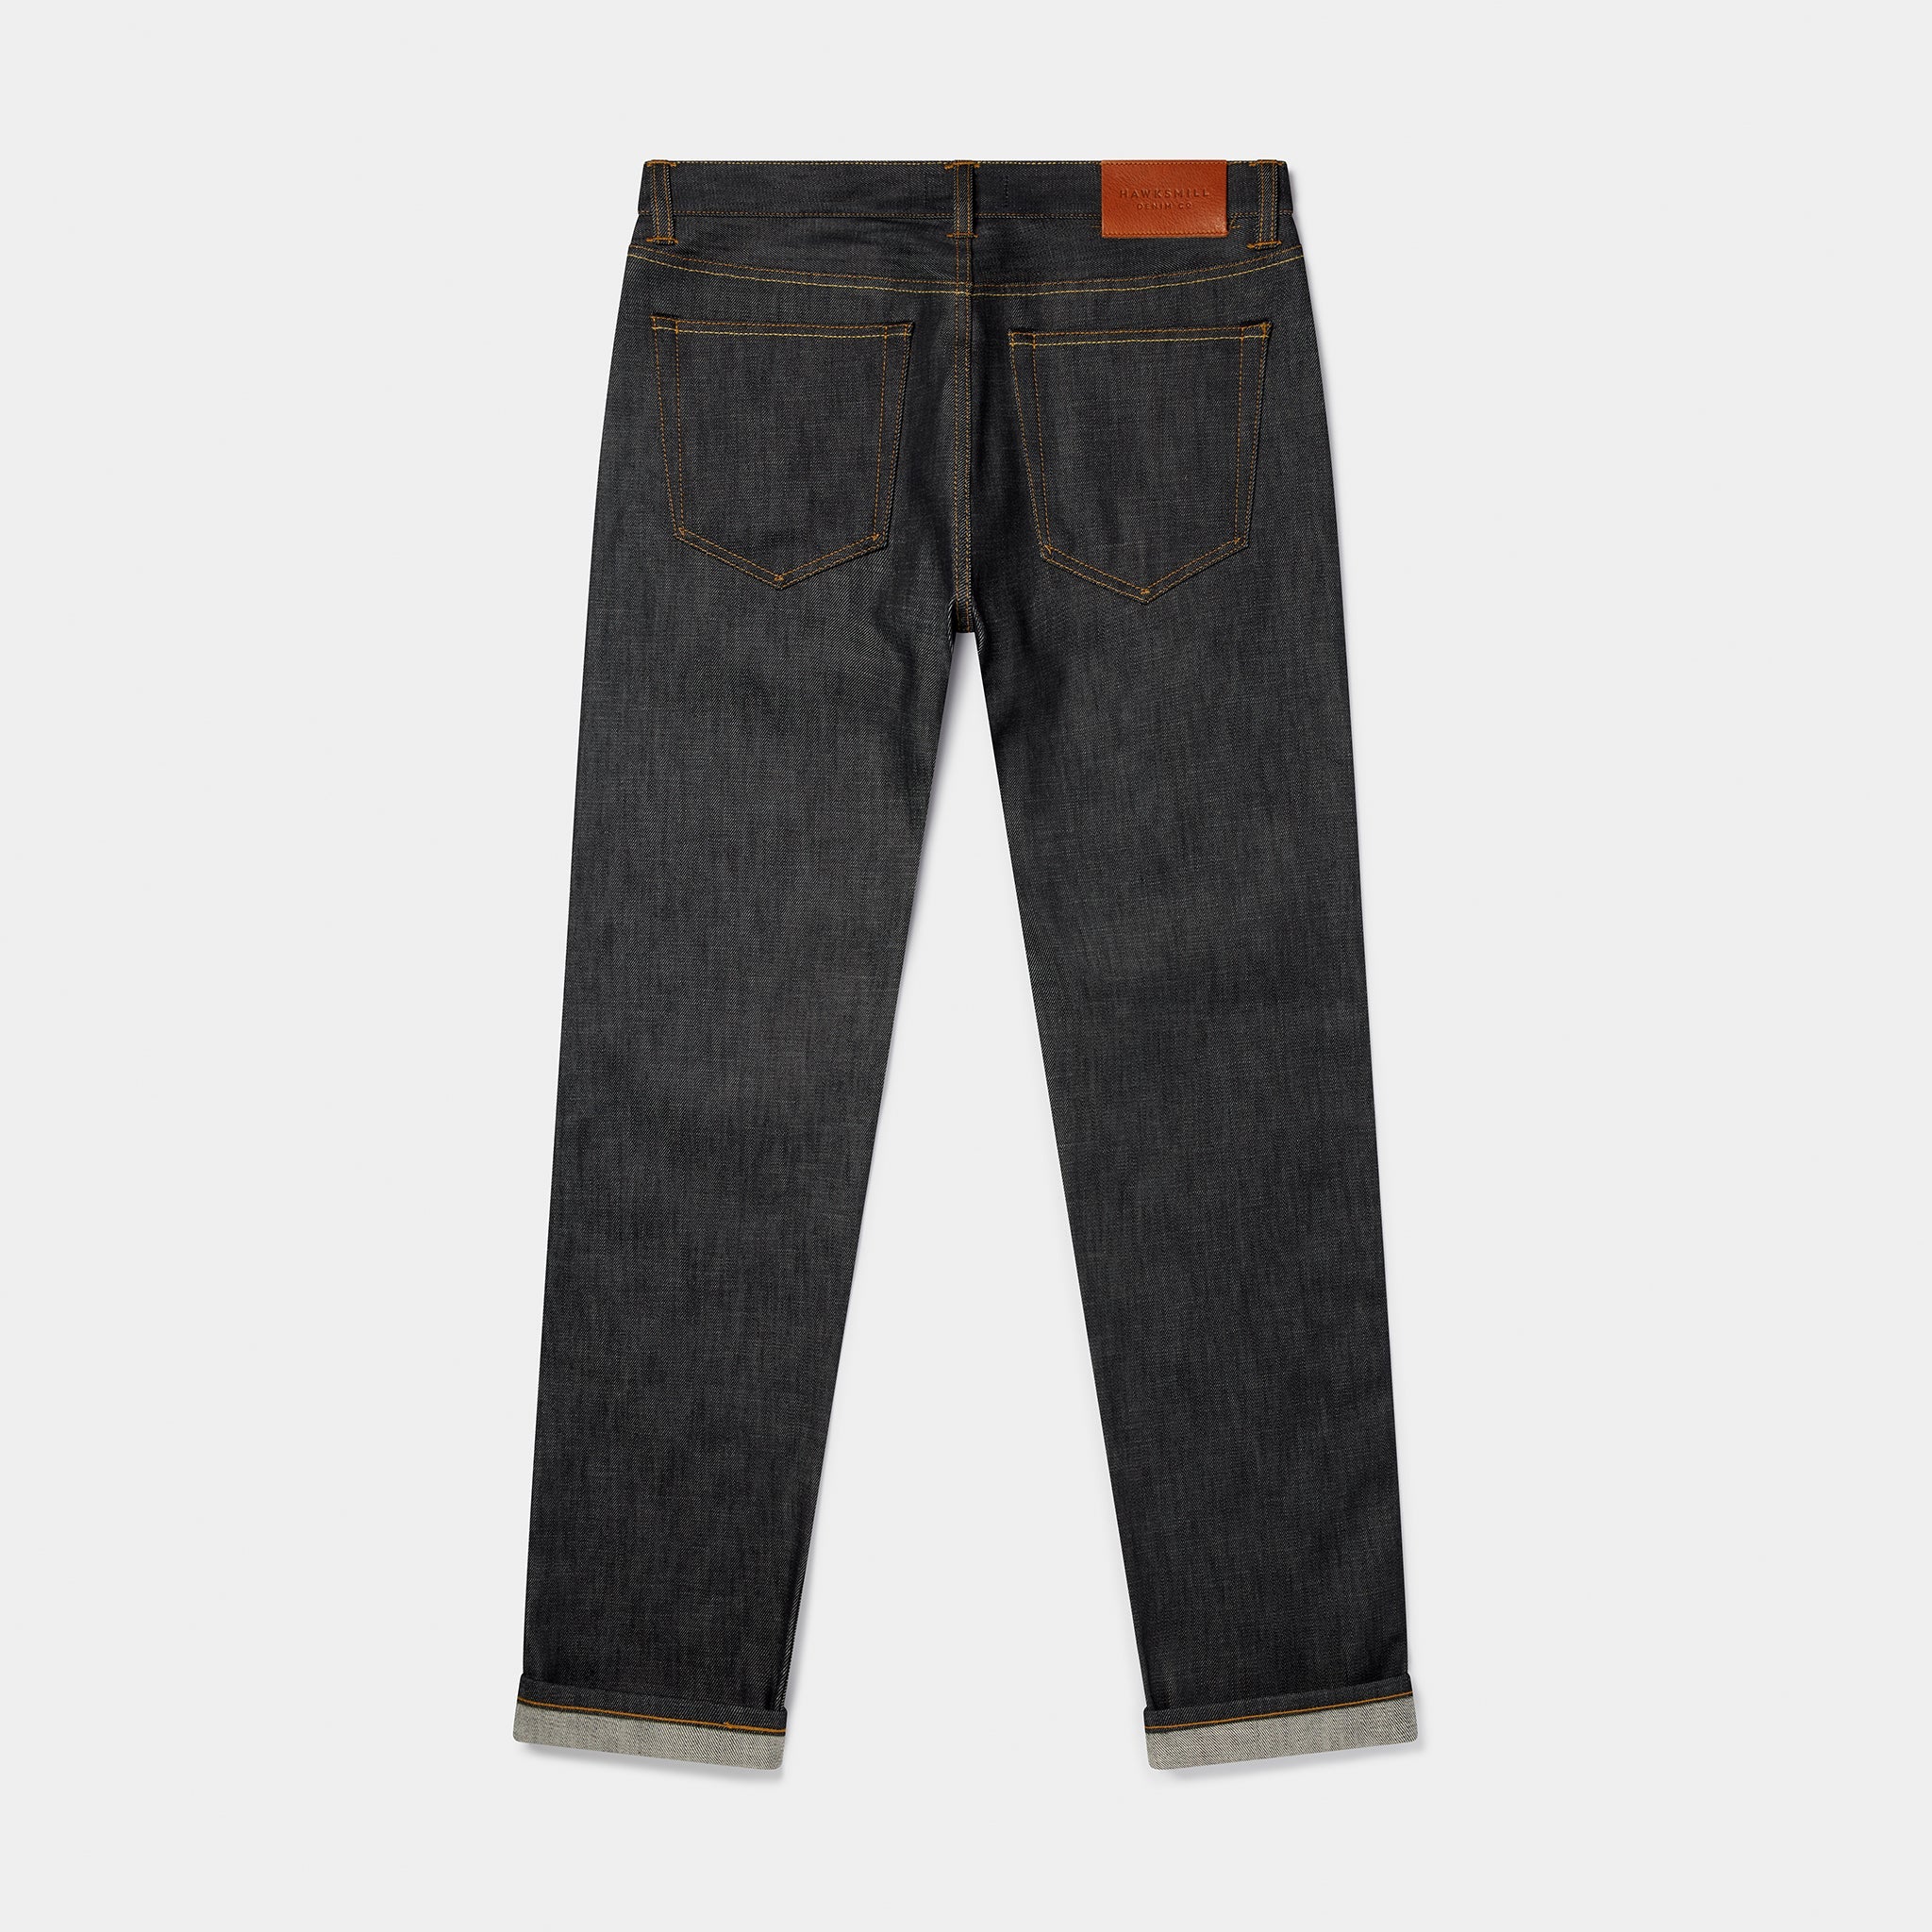 Wide Tapered 14.5oz Isko Orange Listed Organic Selvedge Jeans (Indigo) -  Hawksmill Denim Co